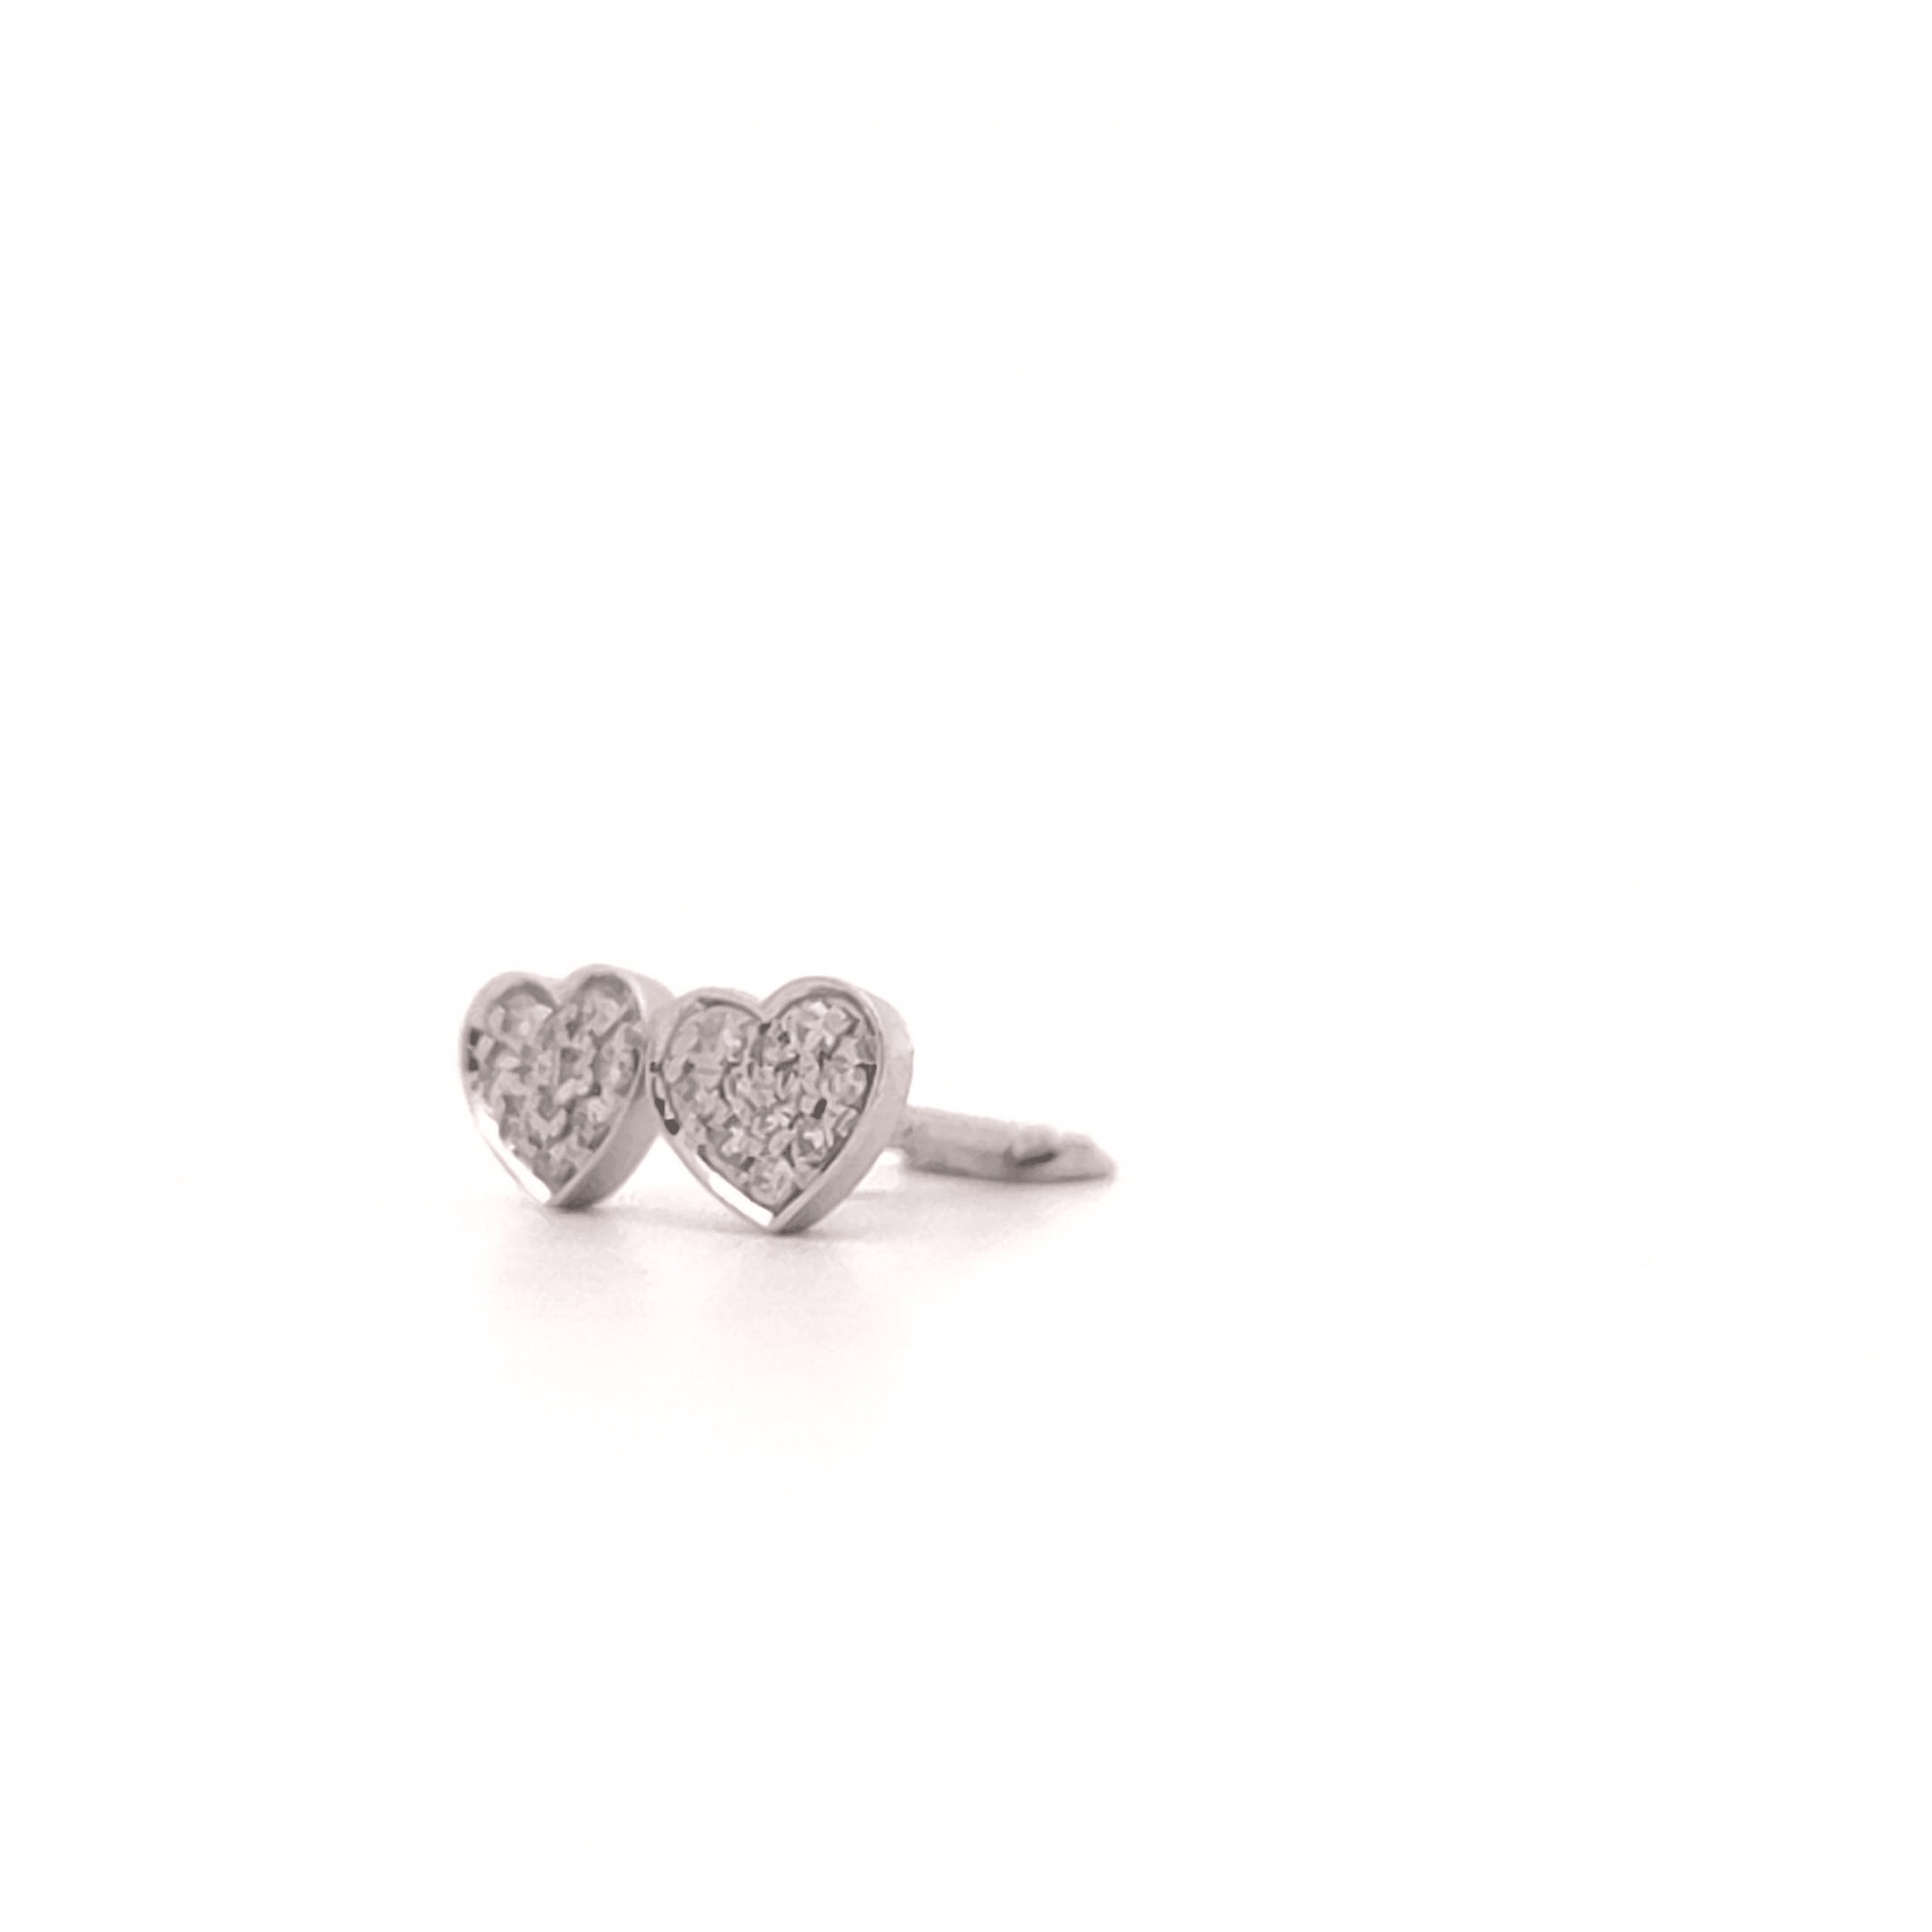 0.11ct Brilliant Cut Diamond Heart Shaped Stud Earrings in White Gold